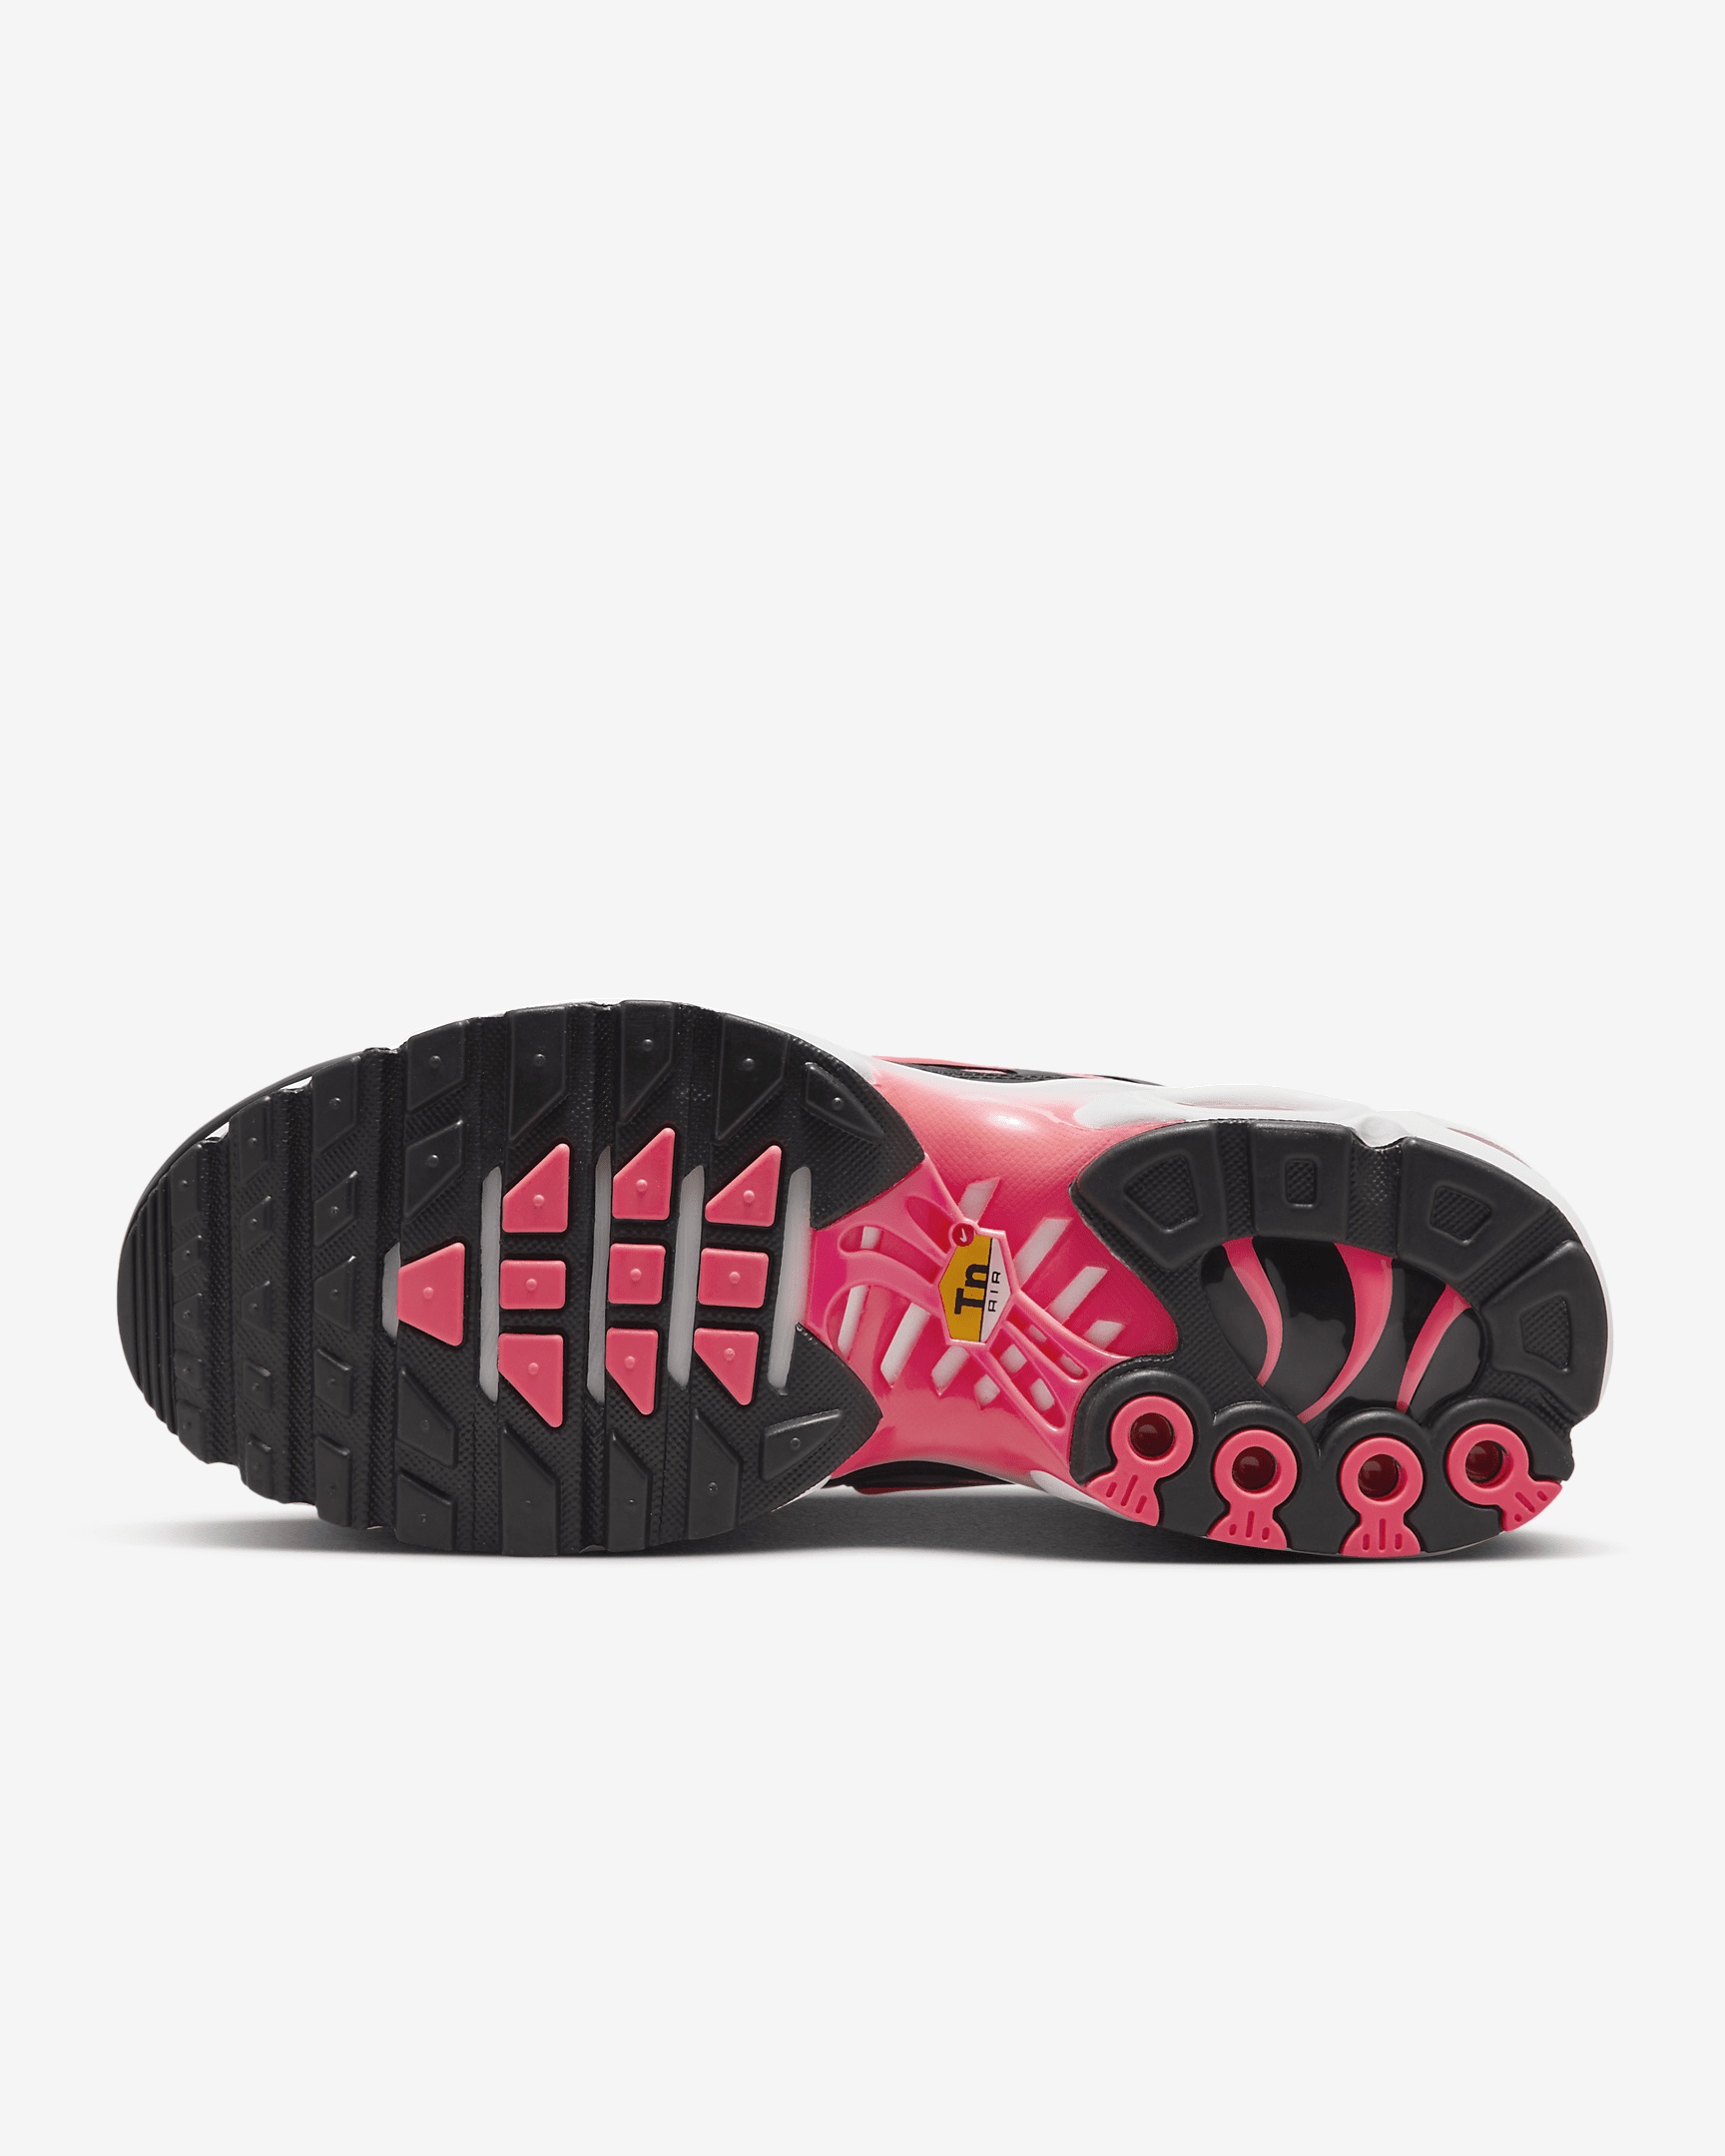 Nike Women's Air Max Plus Shoes - 2